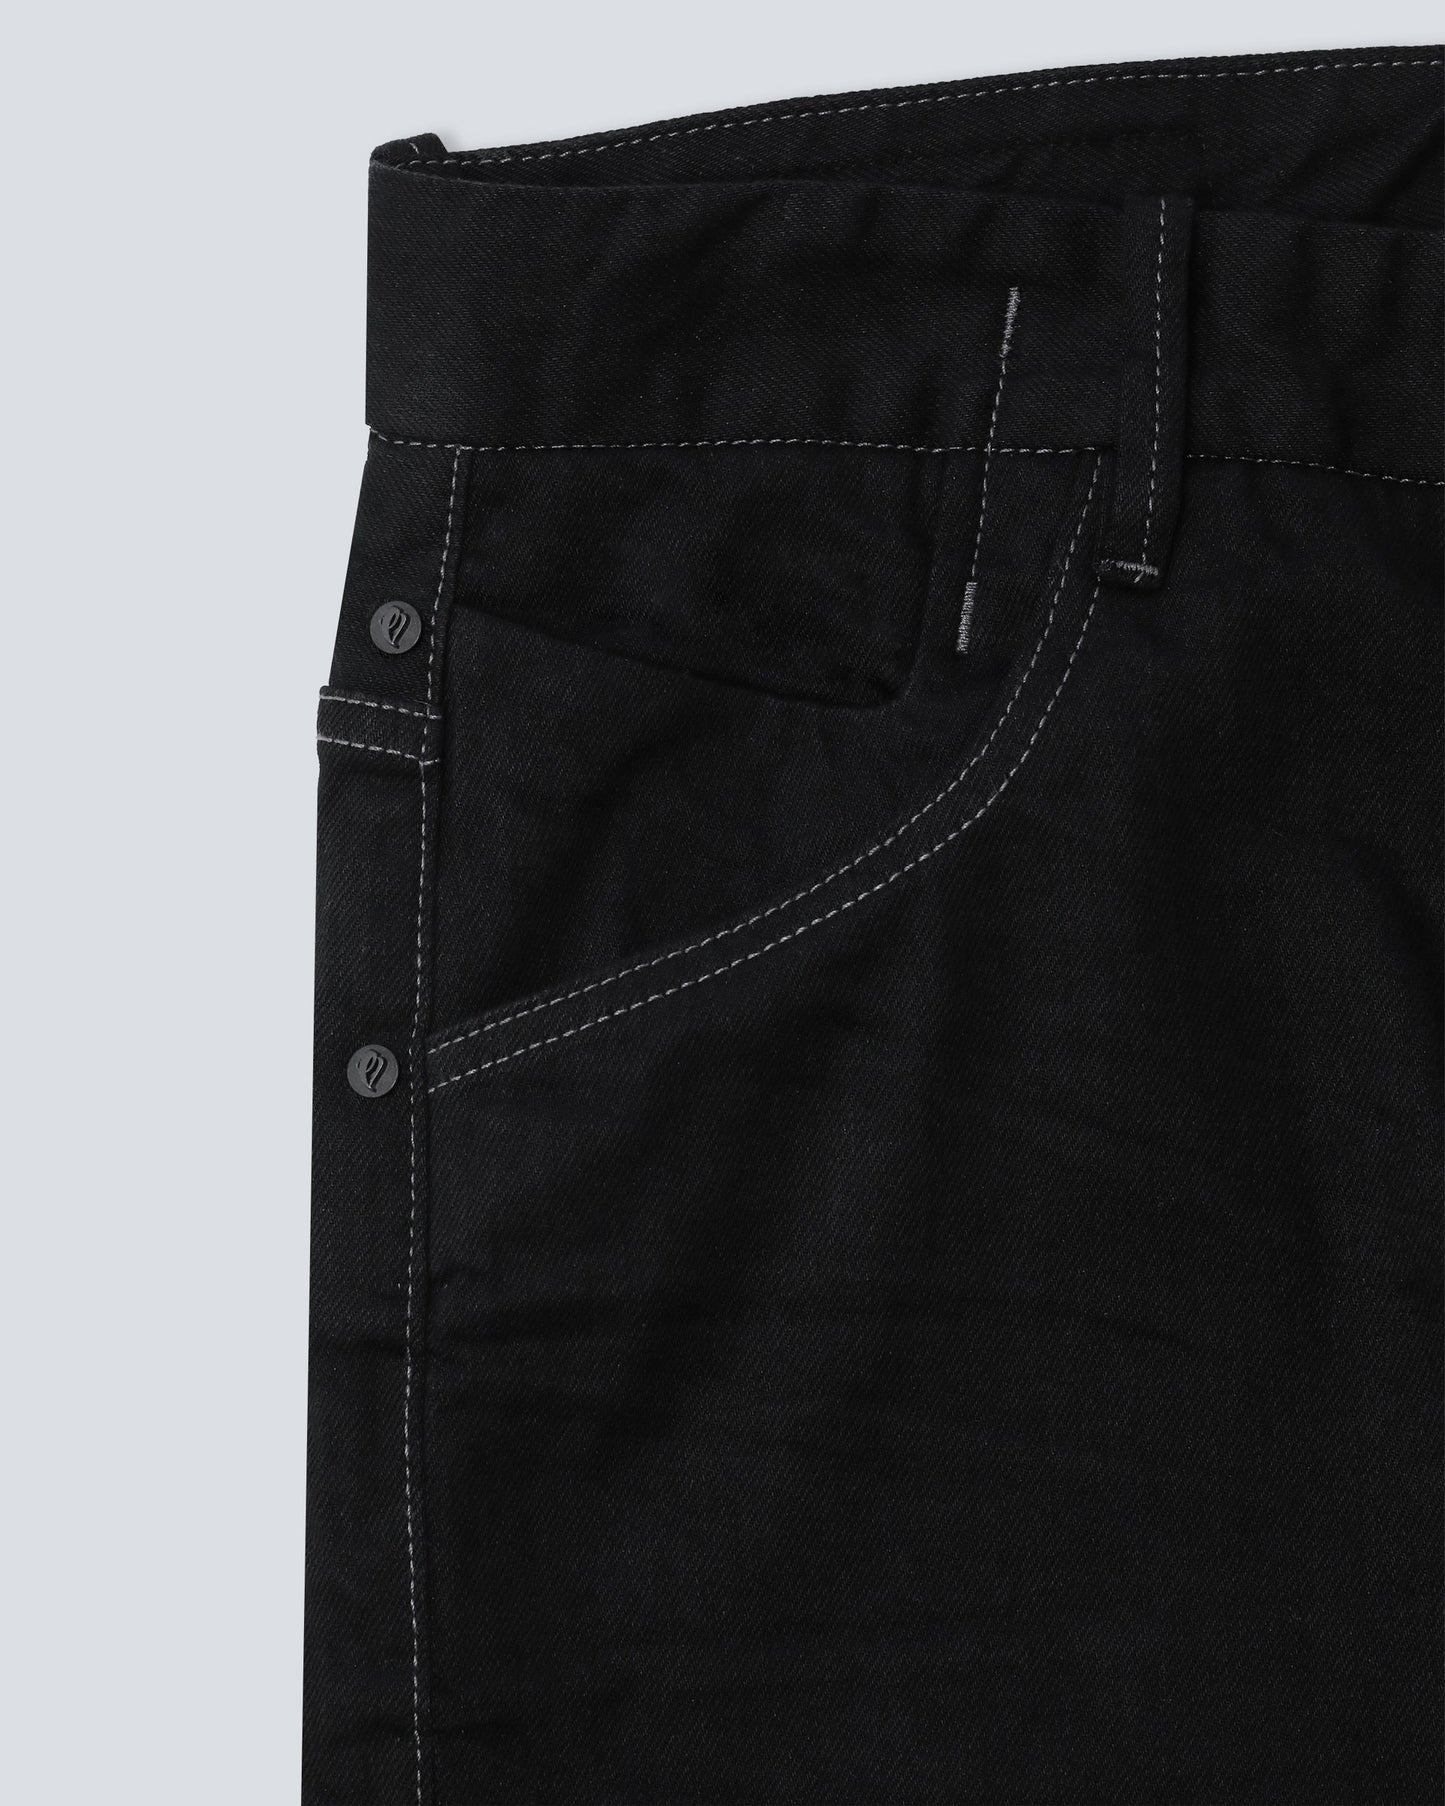 Straight Leg Bi-Stretch Japanese Black Denim Jeans - Neon Purple Logo